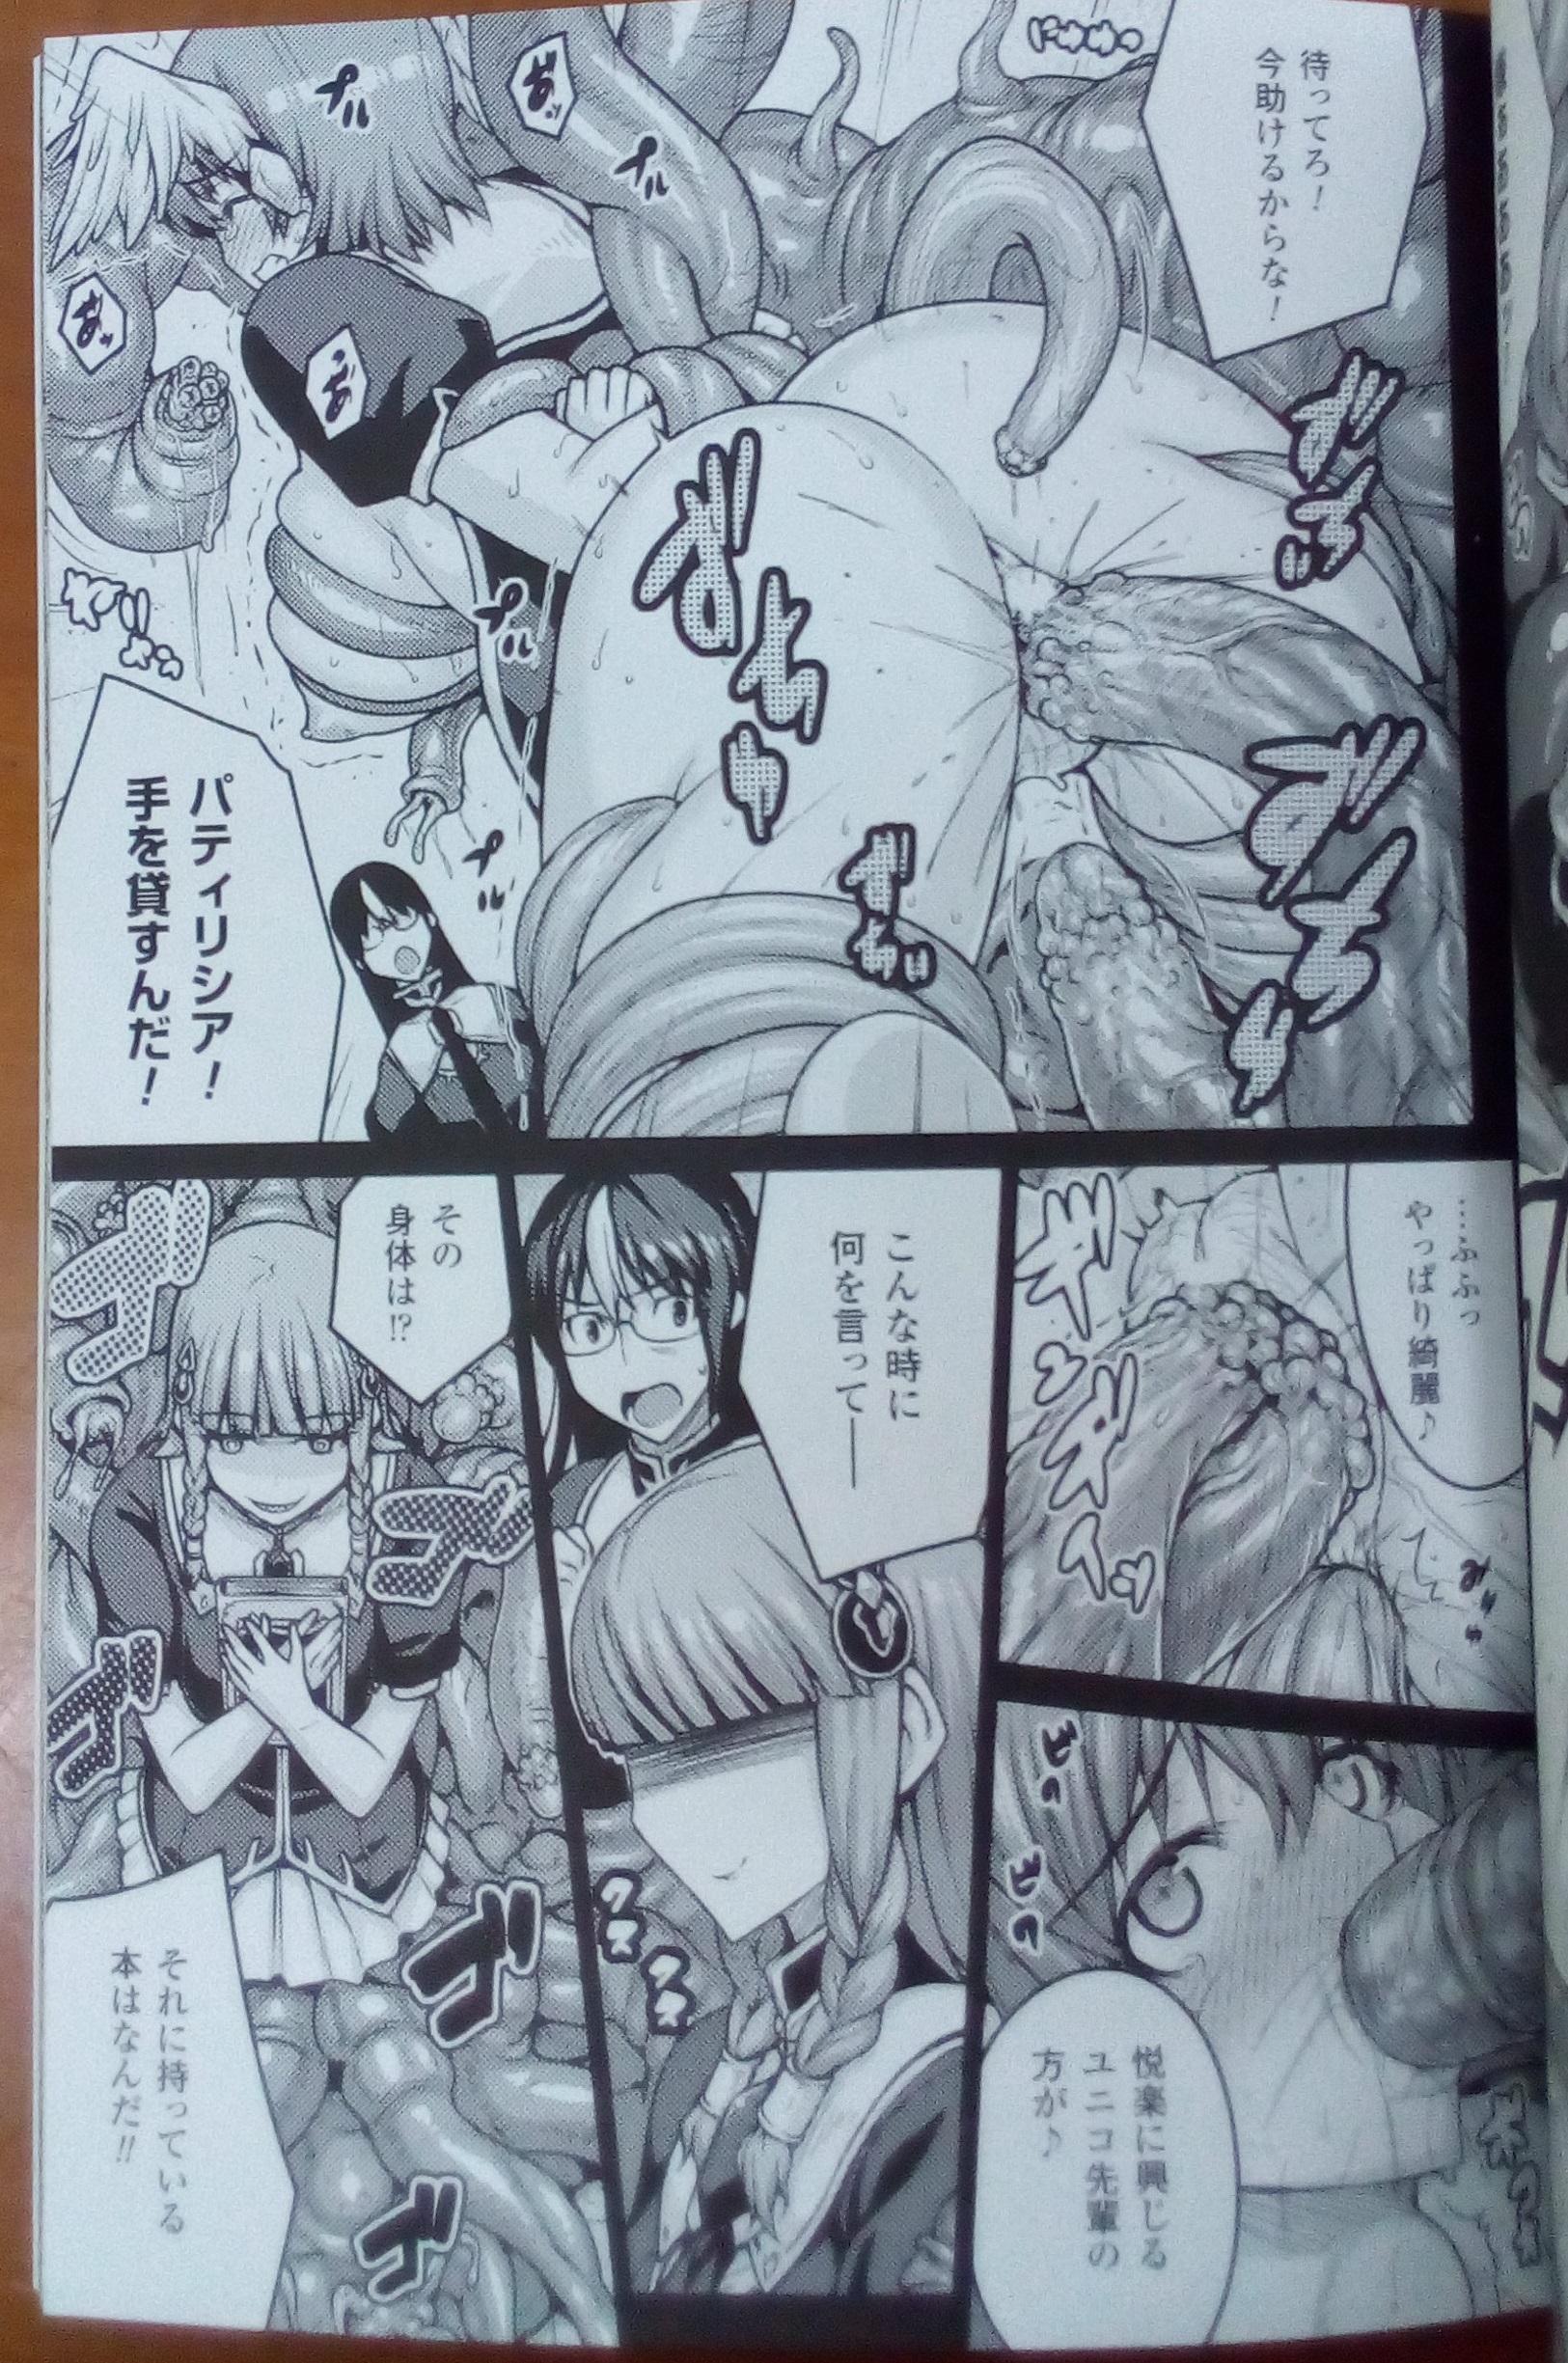 [Erect Sawaru] Shinkyoku no Grimoire III -PANDRA saga 2nd story-  Append book [Photoed] 21